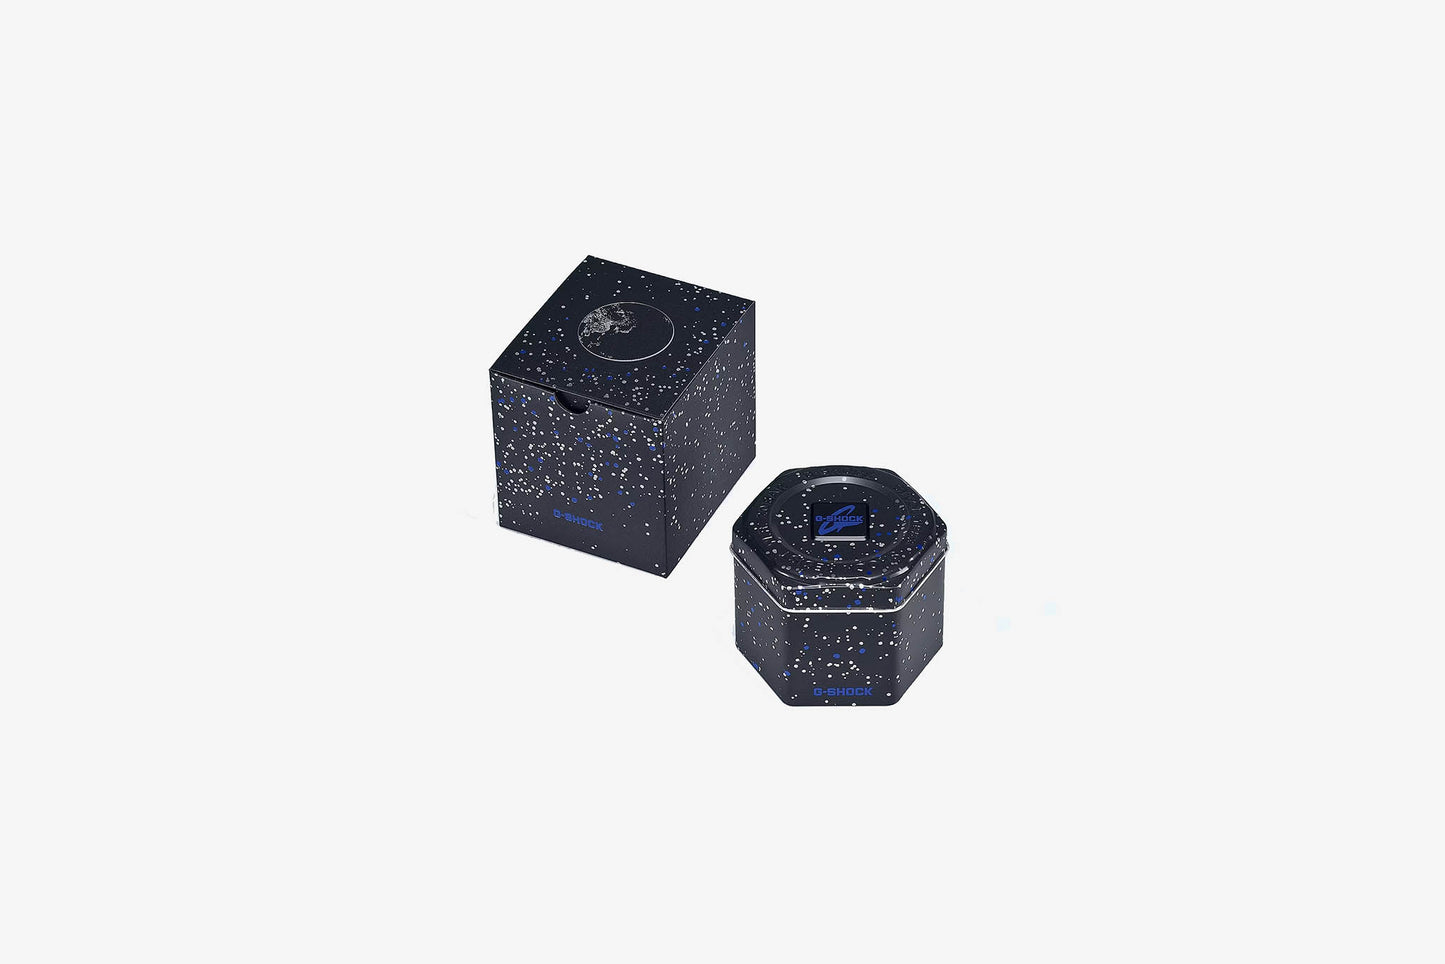 Casio "G-Shock GM110EARTH-1-" Watch - Blue